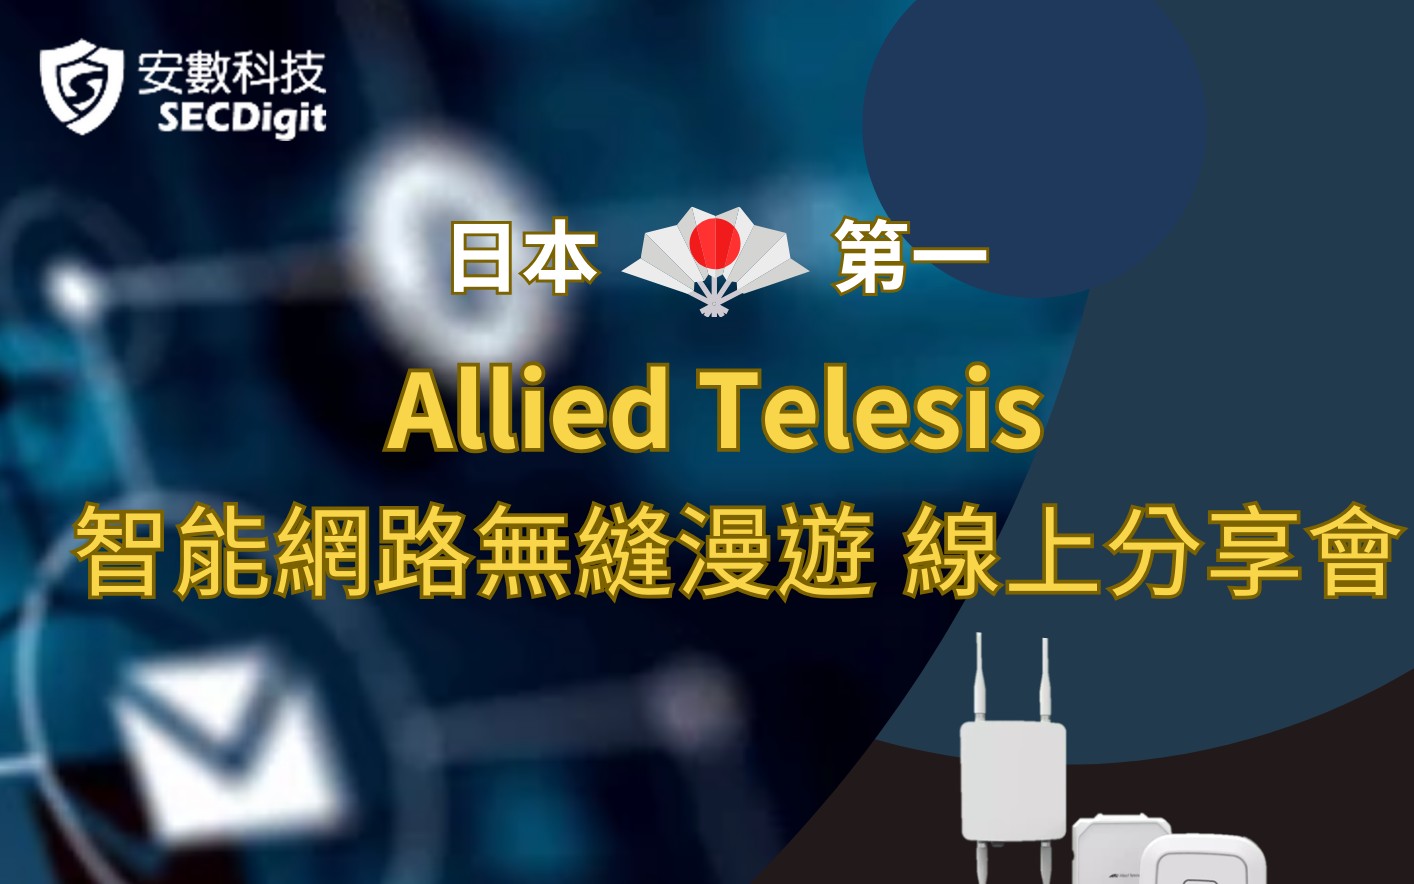 【3/14】 Allied Telesis 智能網路無縫漫遊 線上分享會